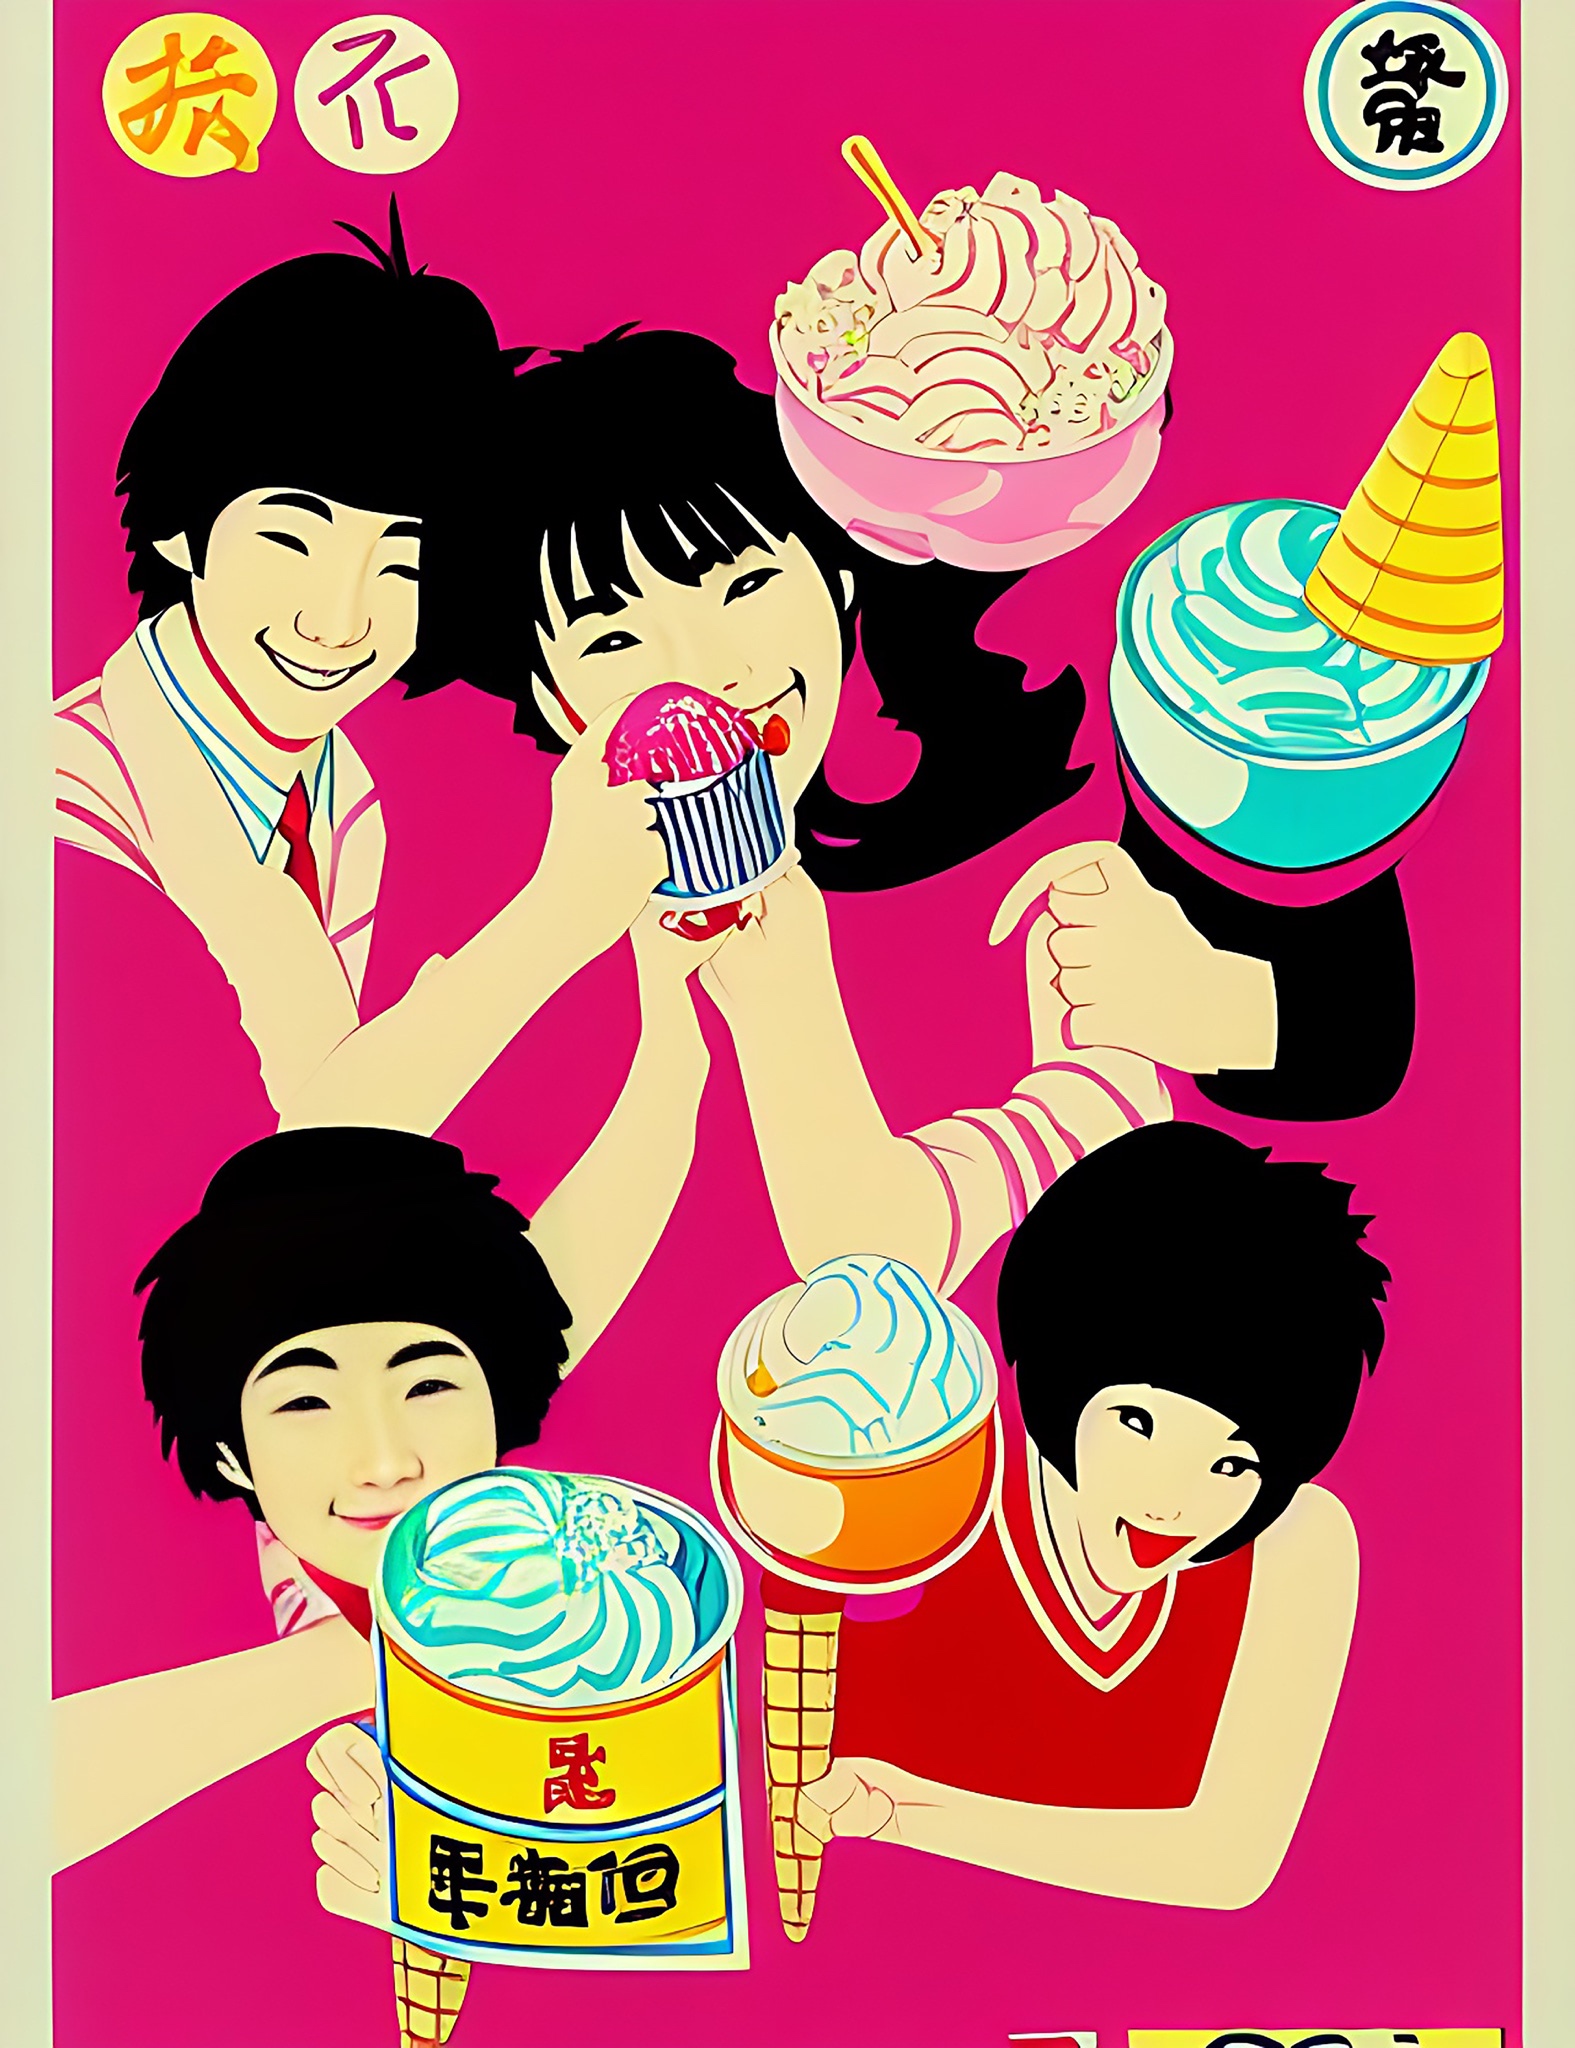 japan-ice-cream-1980s-poster-design-vintage-1